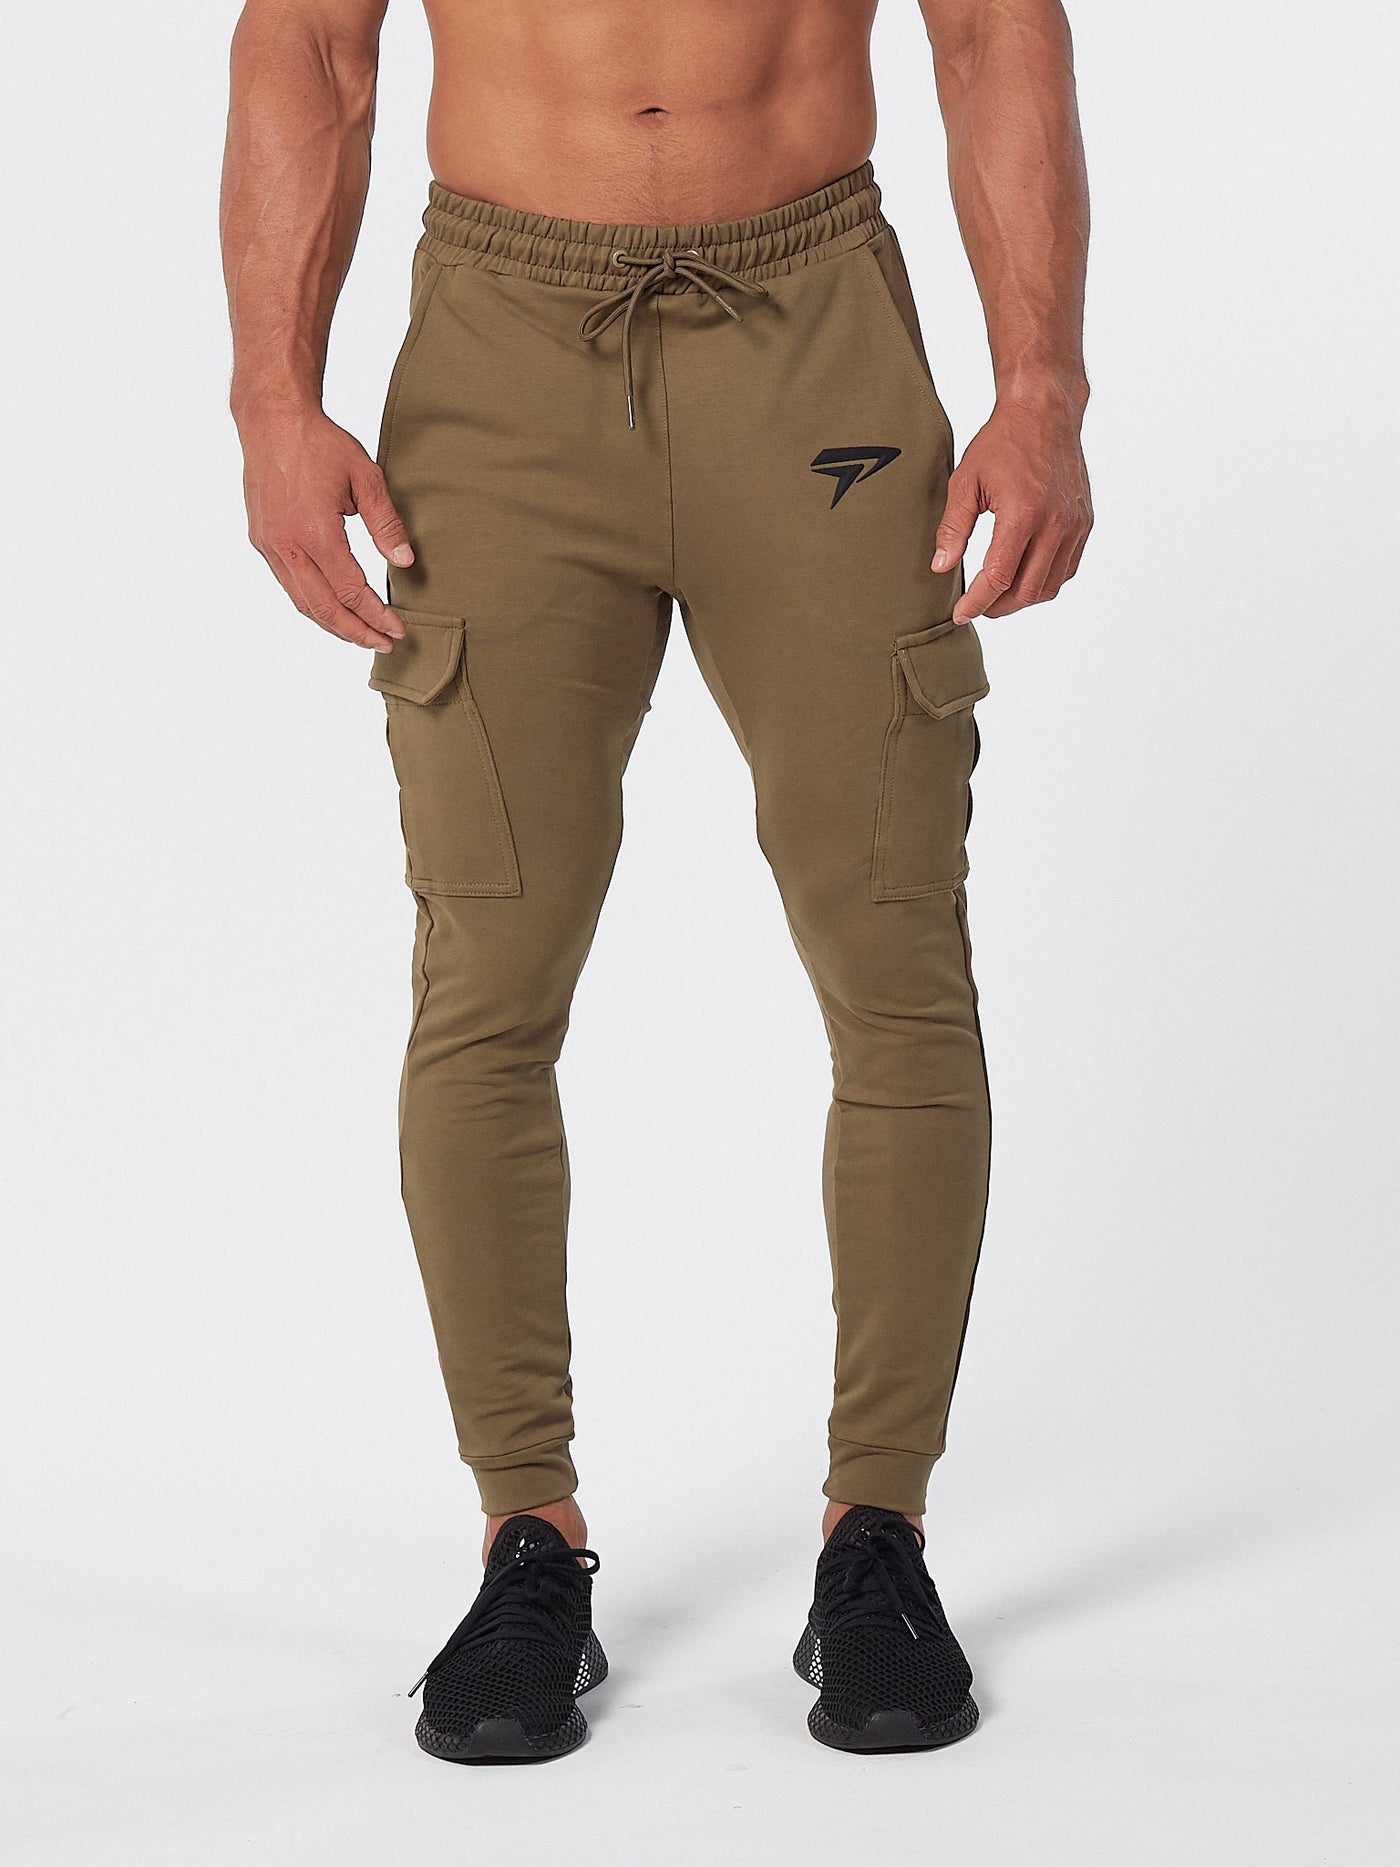 PHYSIQ APPAREL Cargo Bottoms Men's Track Pants Joggers Khaki - Activemen Clothing